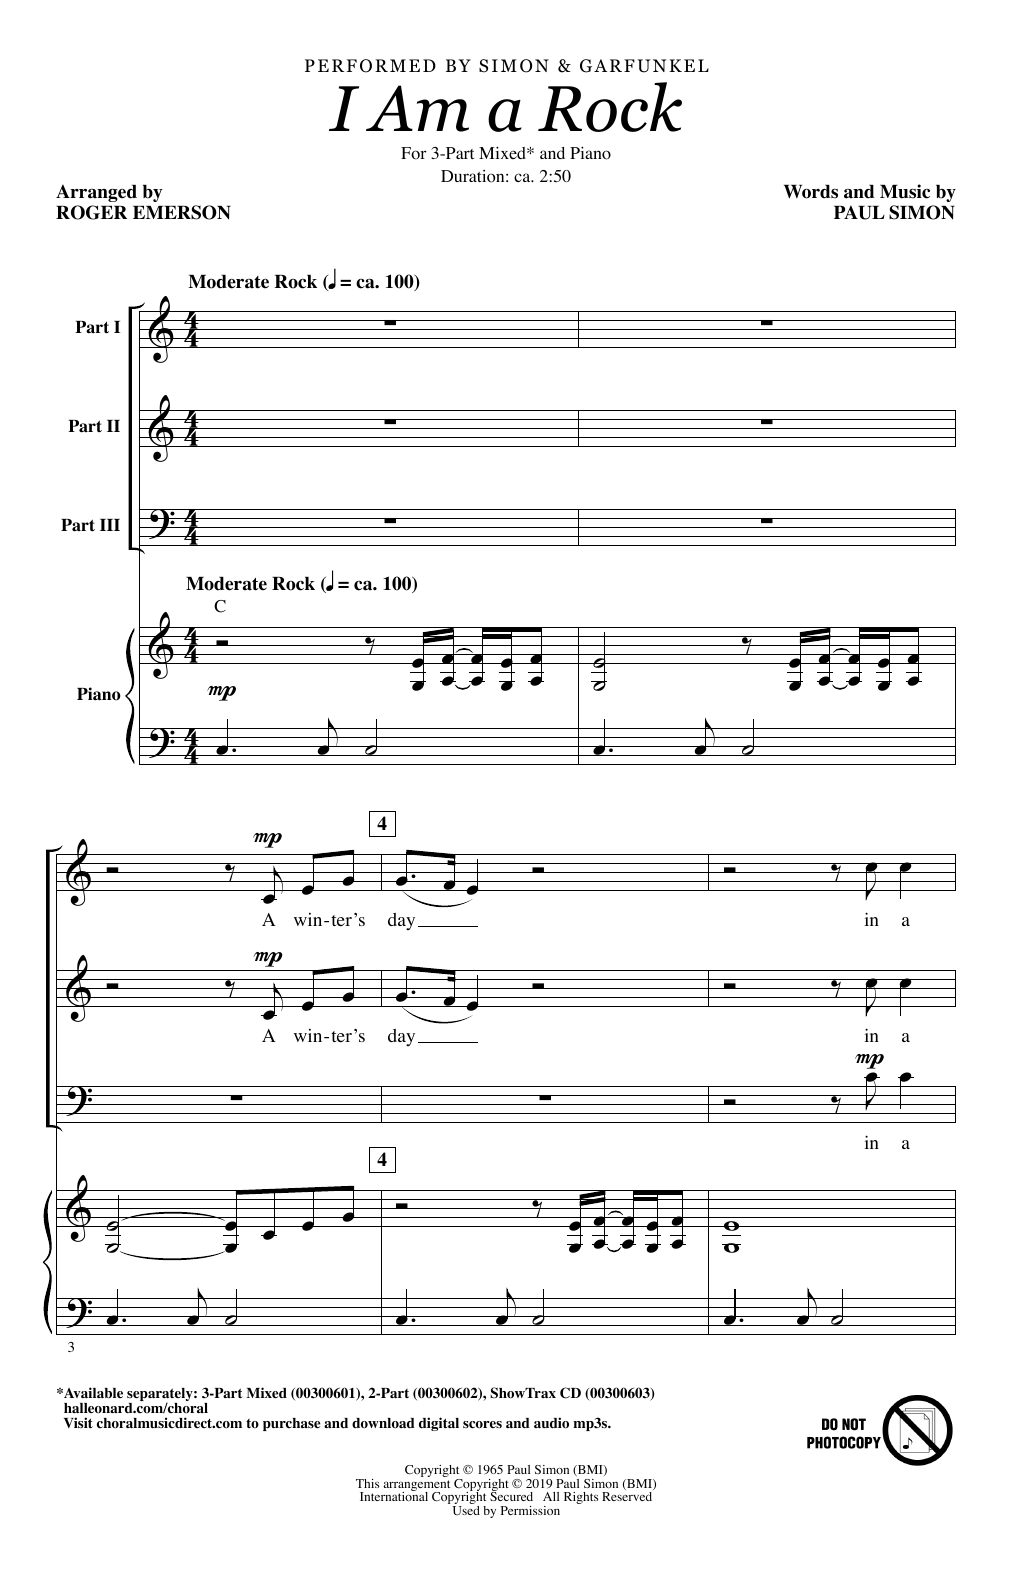 Simon & Garfunkel I Am A Rock (arr. Roger Emerson) Sheet Music Notes & Chords for 2-Part Choir - Download or Print PDF